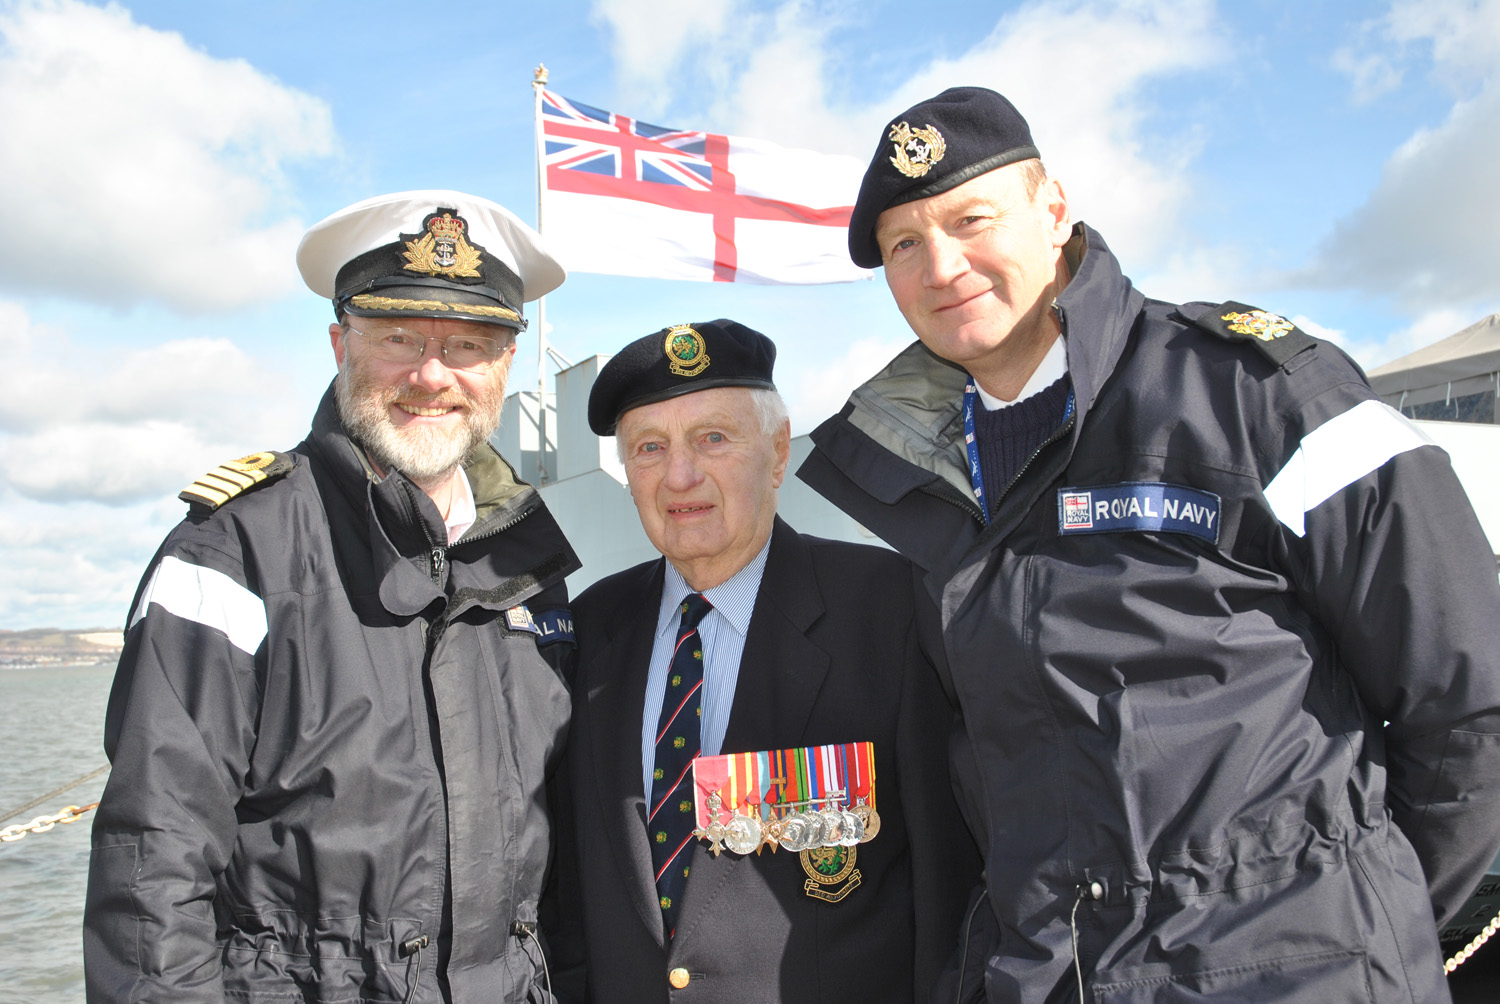 Royal Navy veteran gets impressive tour of Portsmouth dockyard | Royal Navy